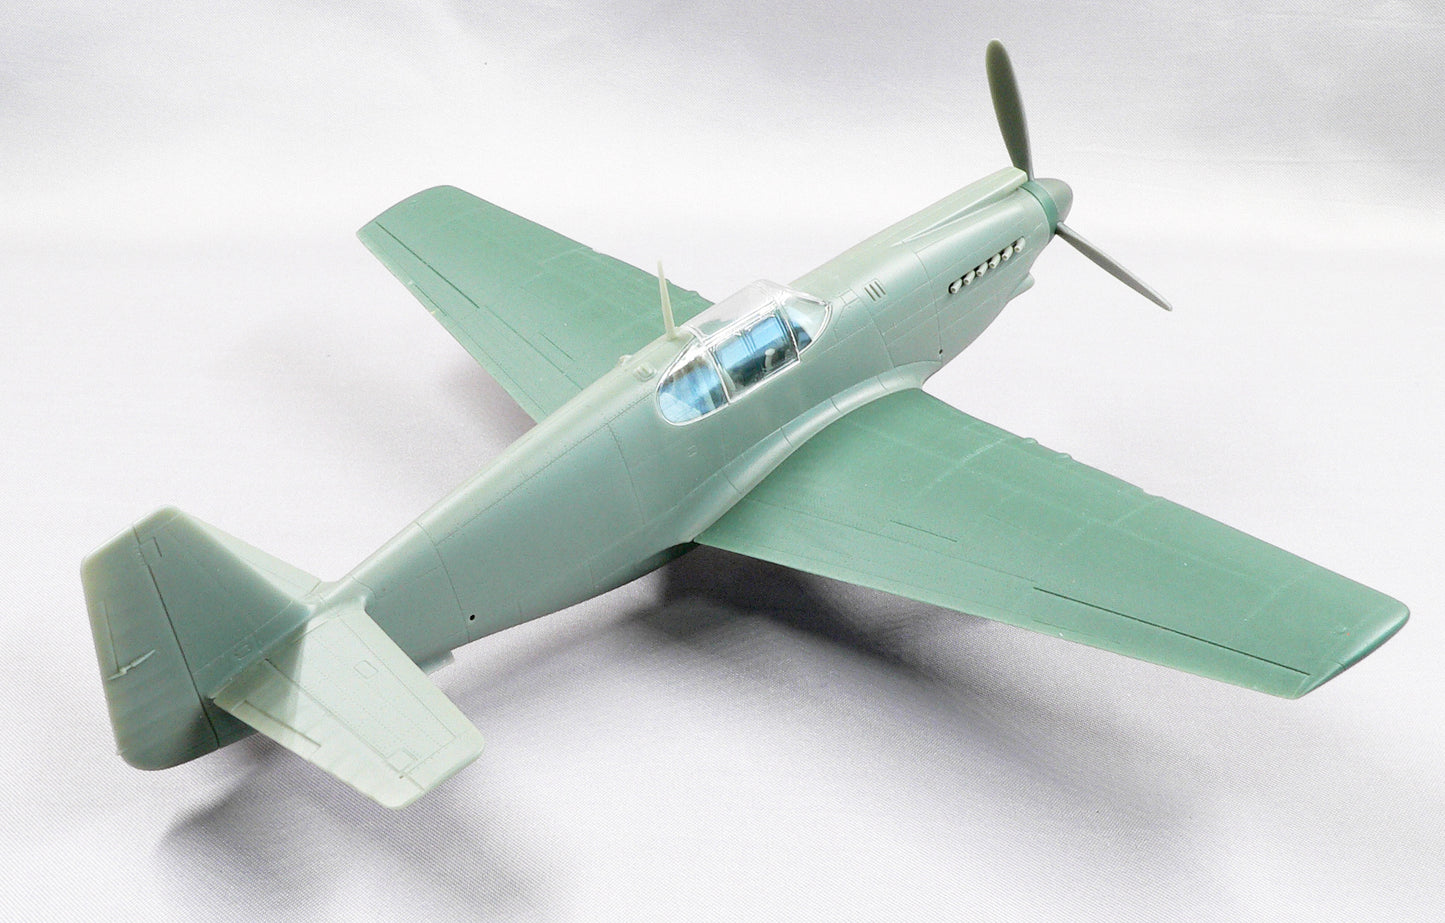 North American XP-51 Halberd Models 1/48 scale